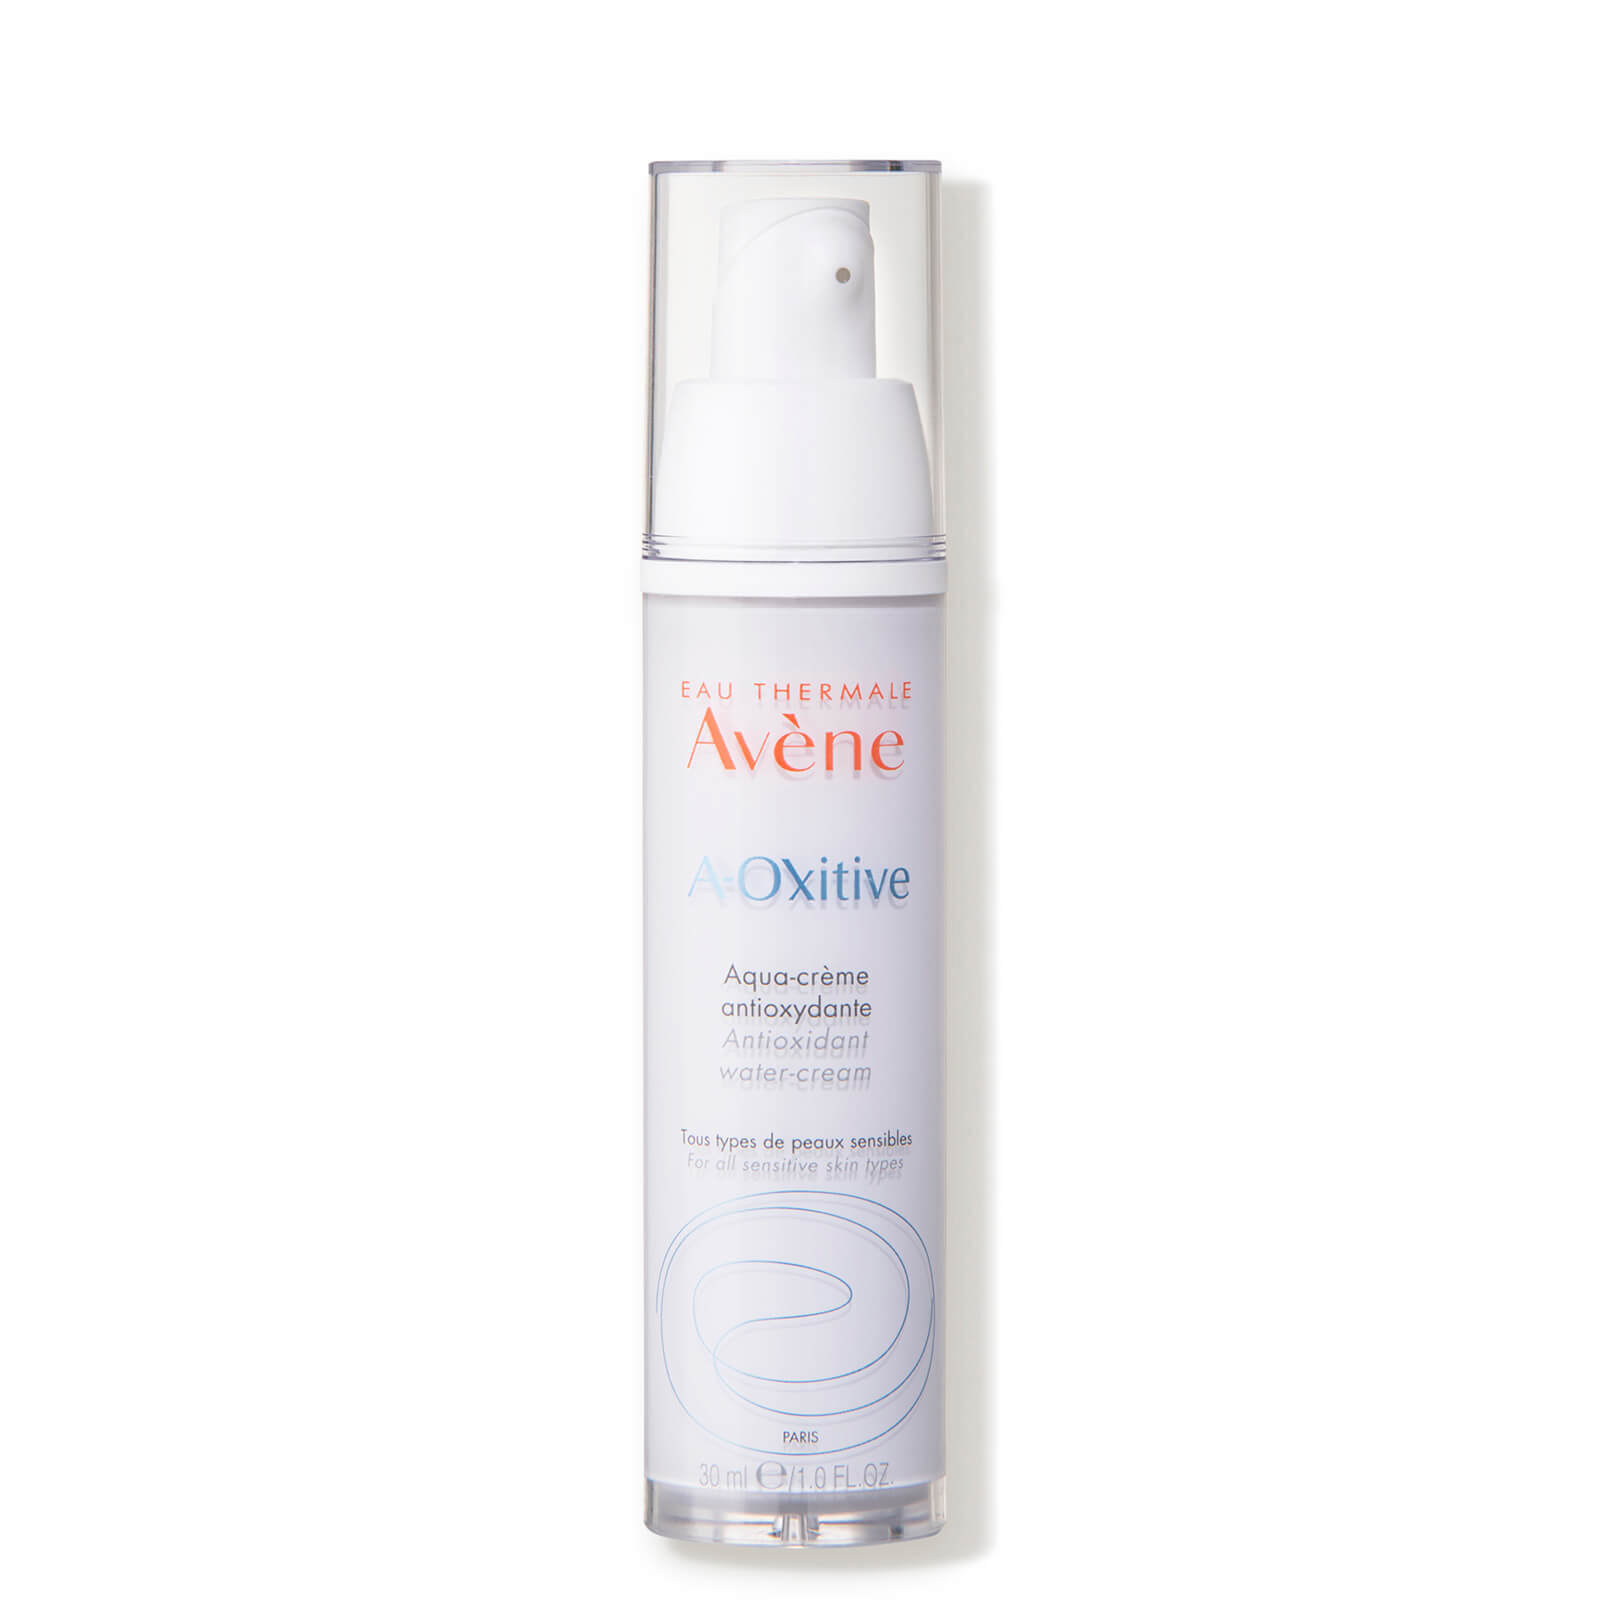 Avene A-Oxitive Antioxidant Water Cream Moisturiser for First Signs of Ageing 30ml